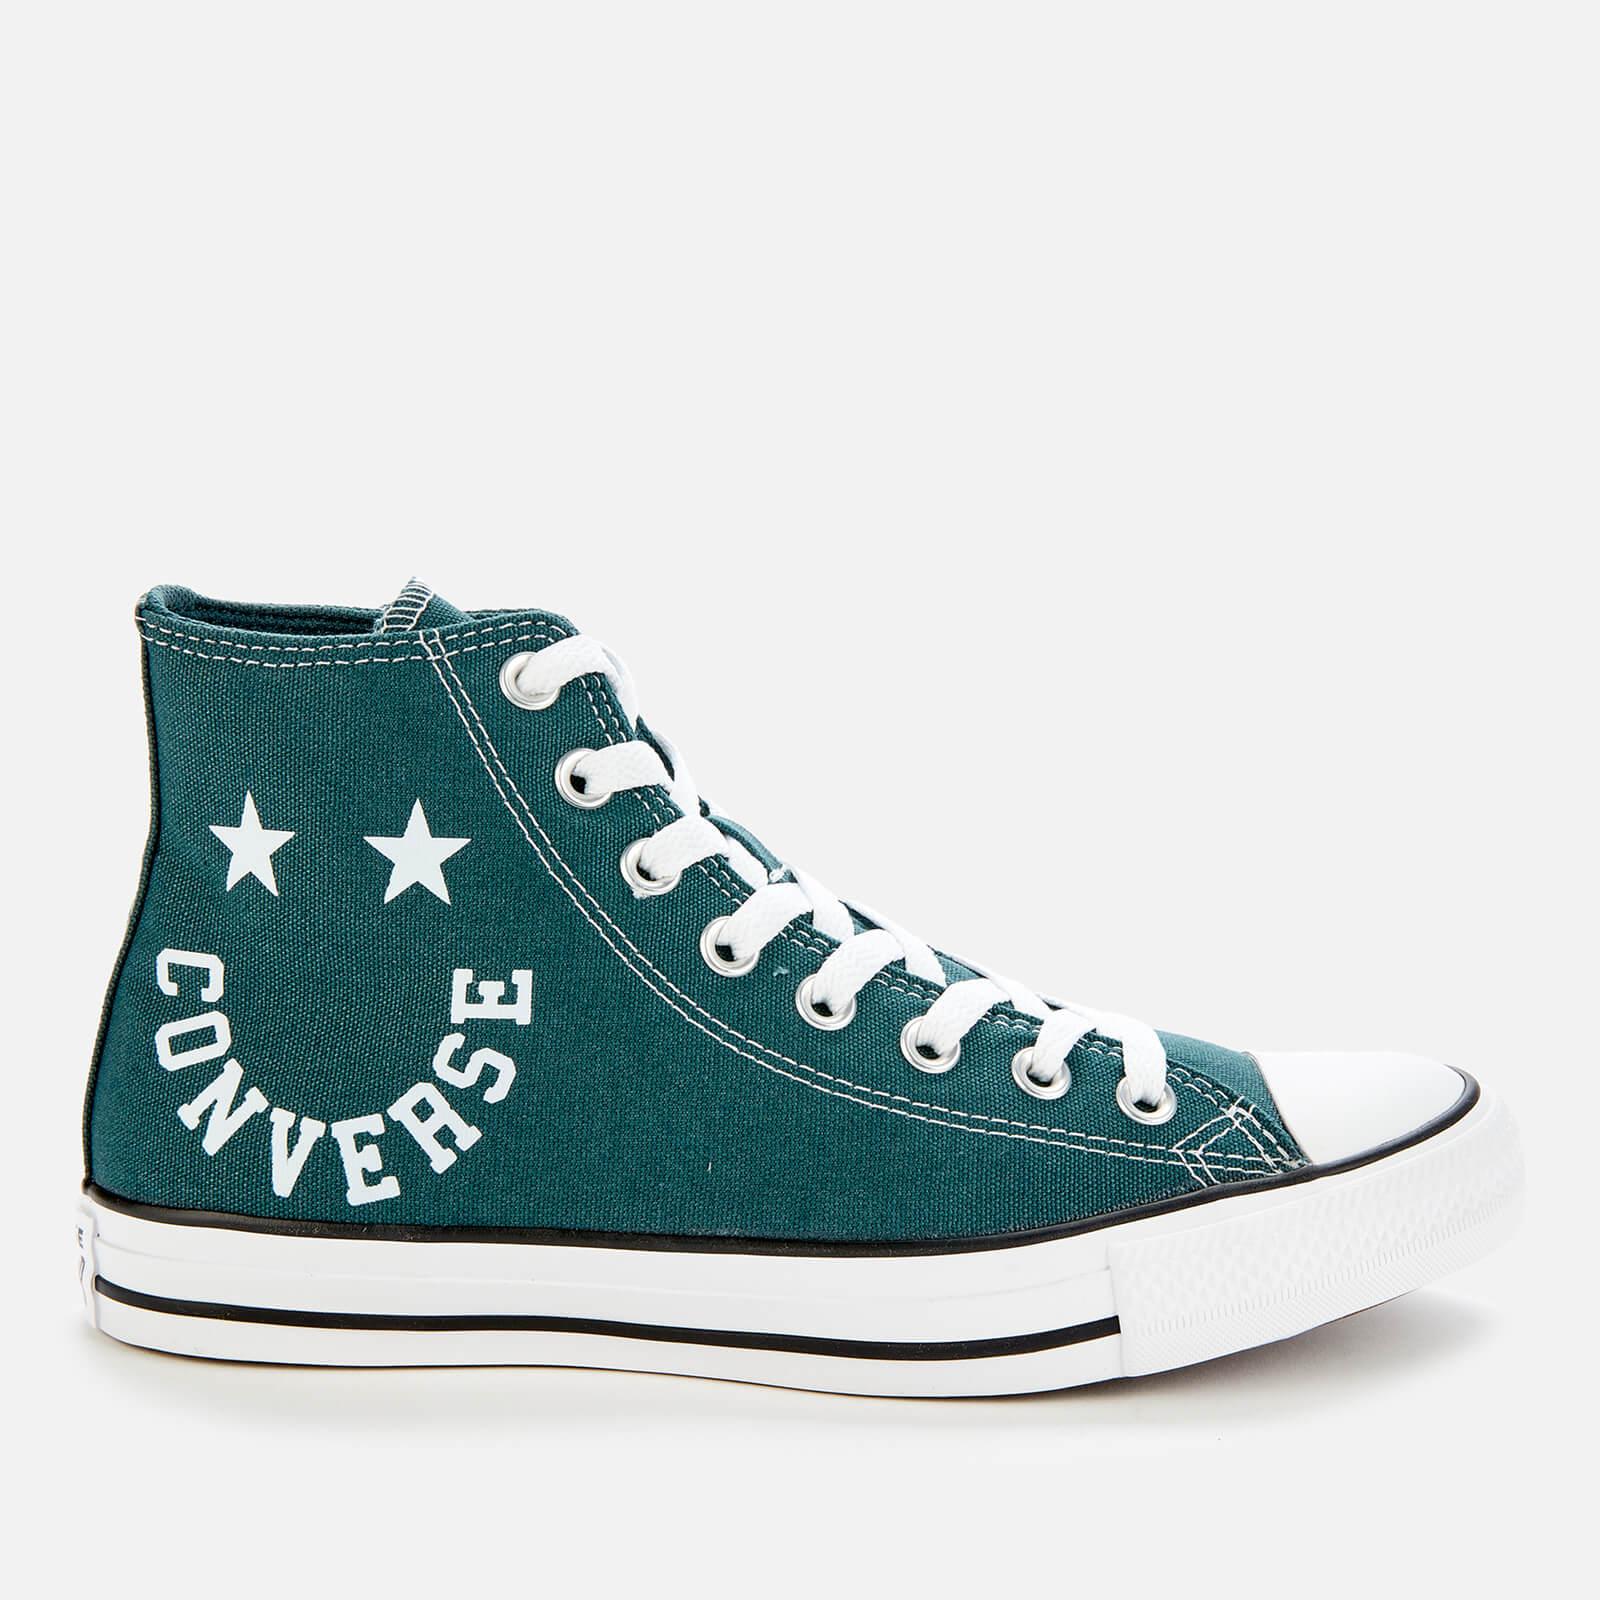 all star green converse